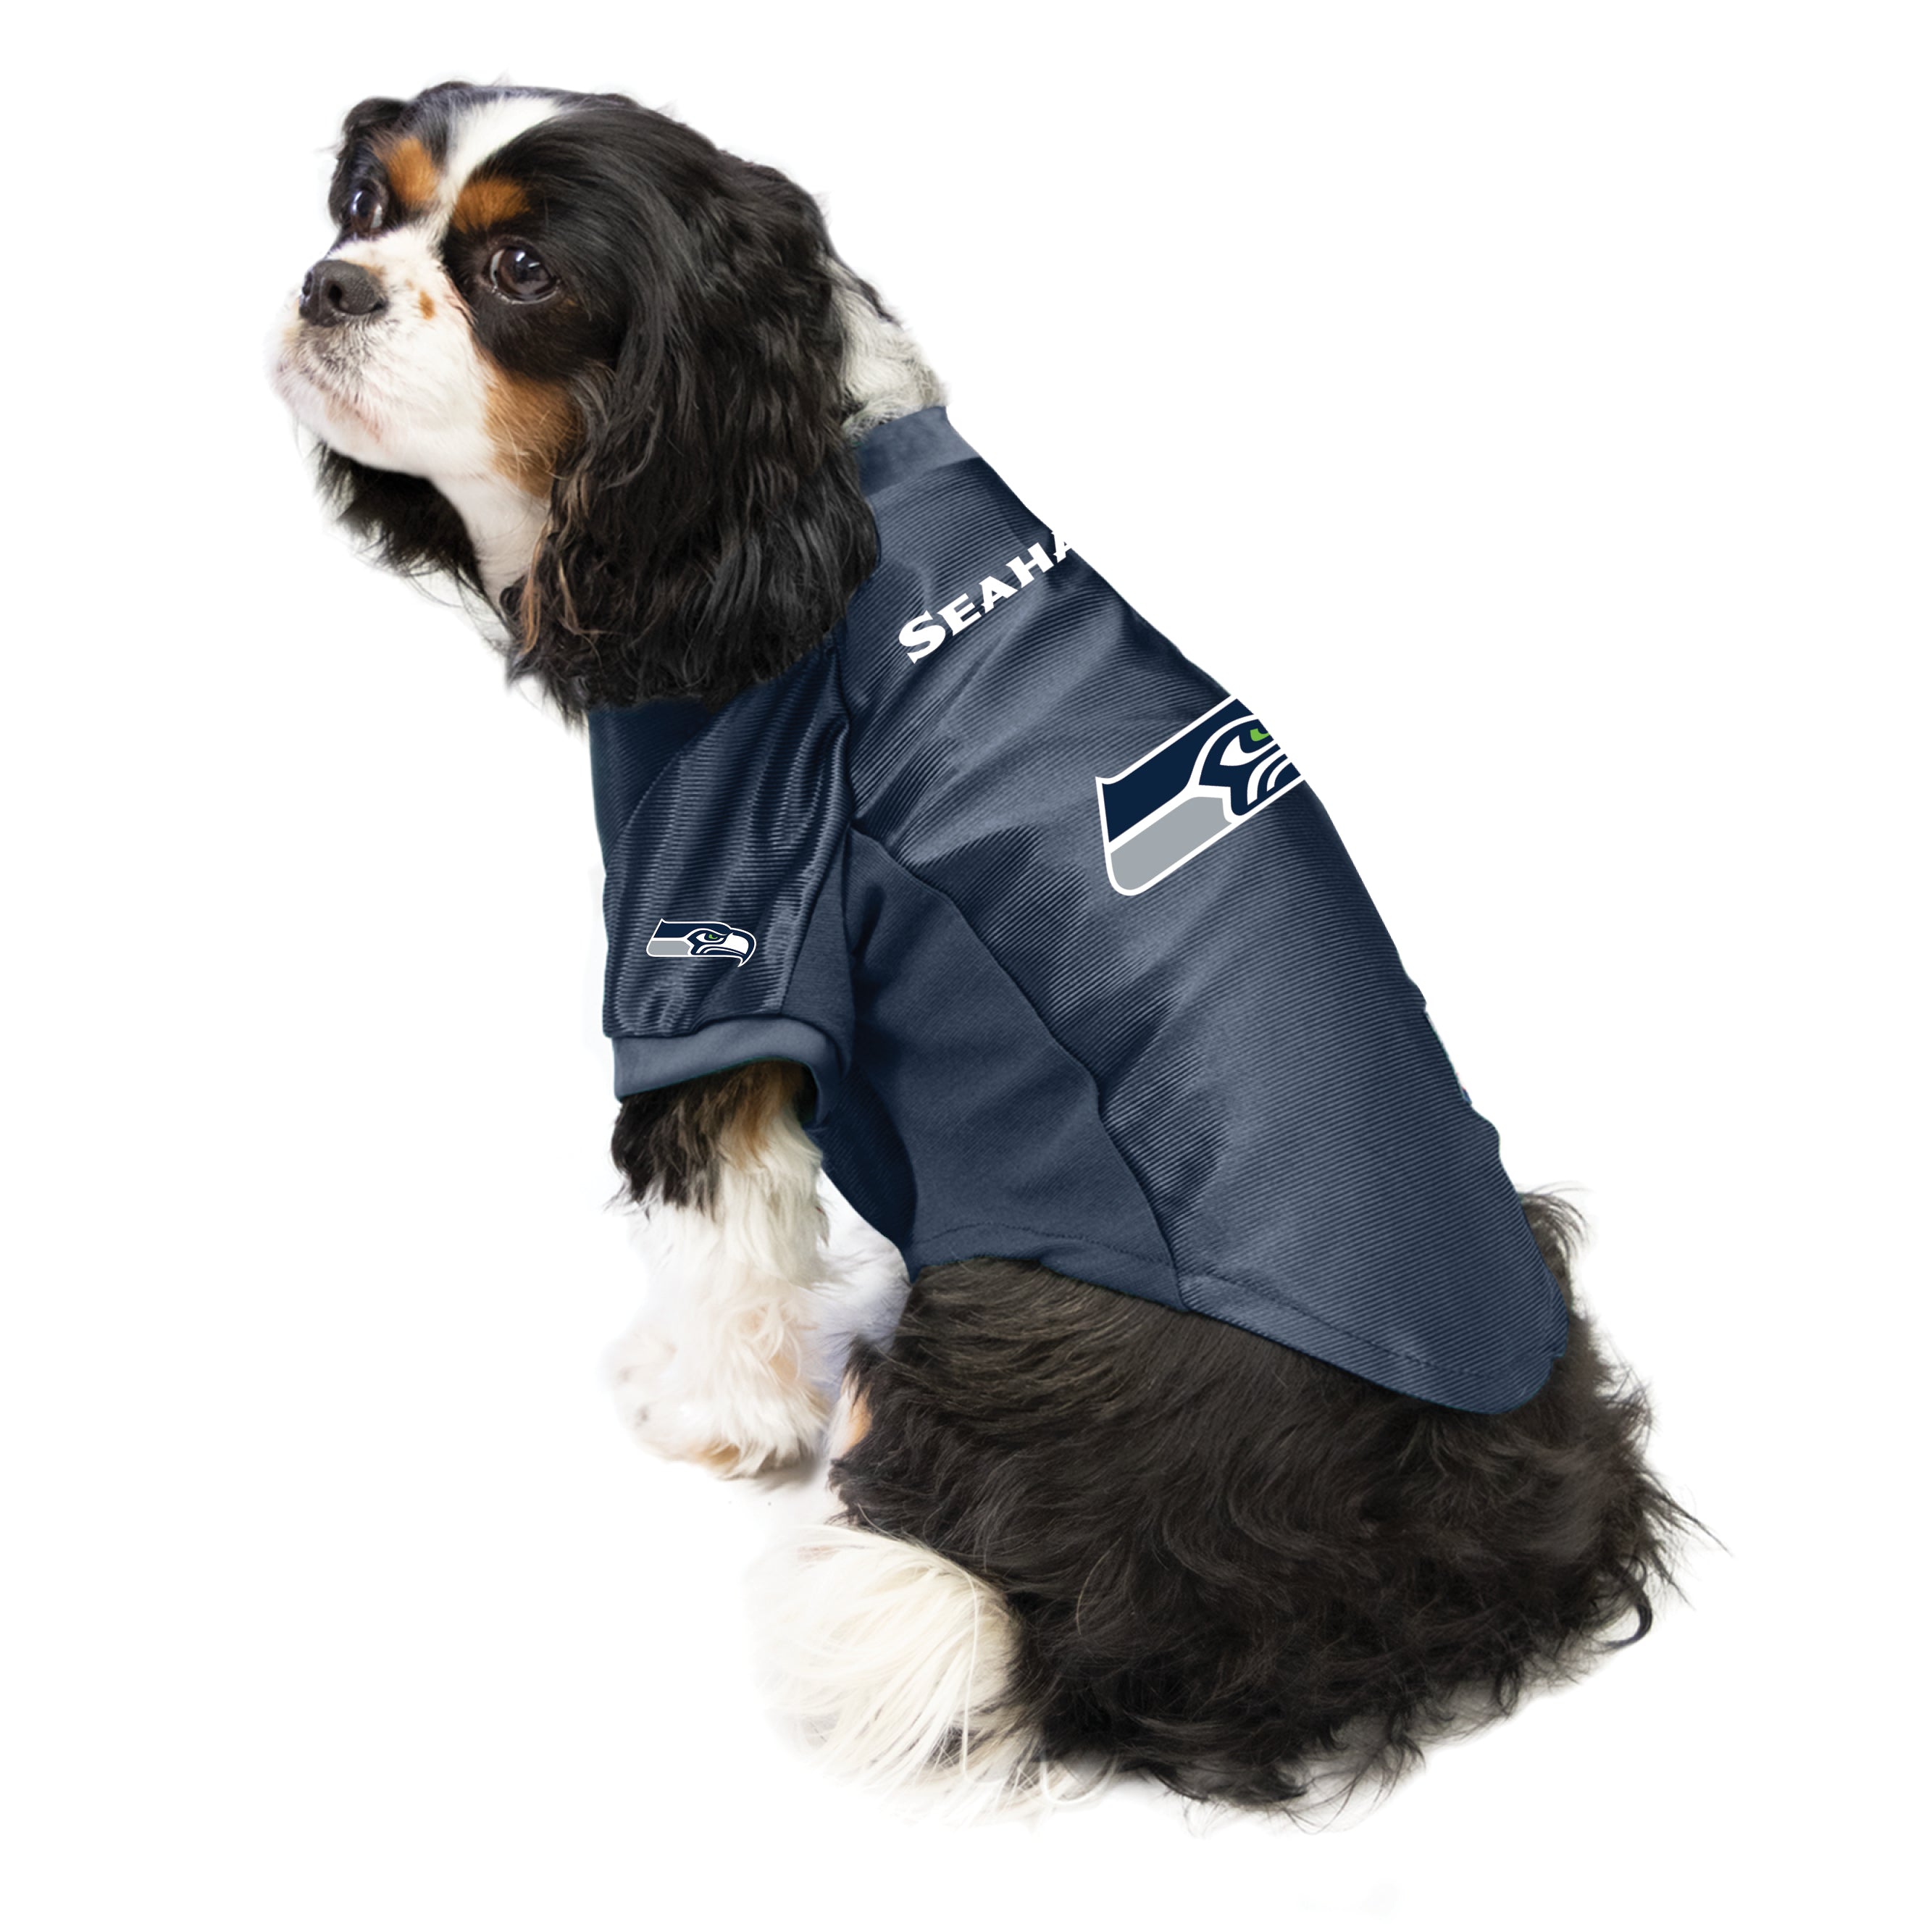 seahawks dog jersey medium